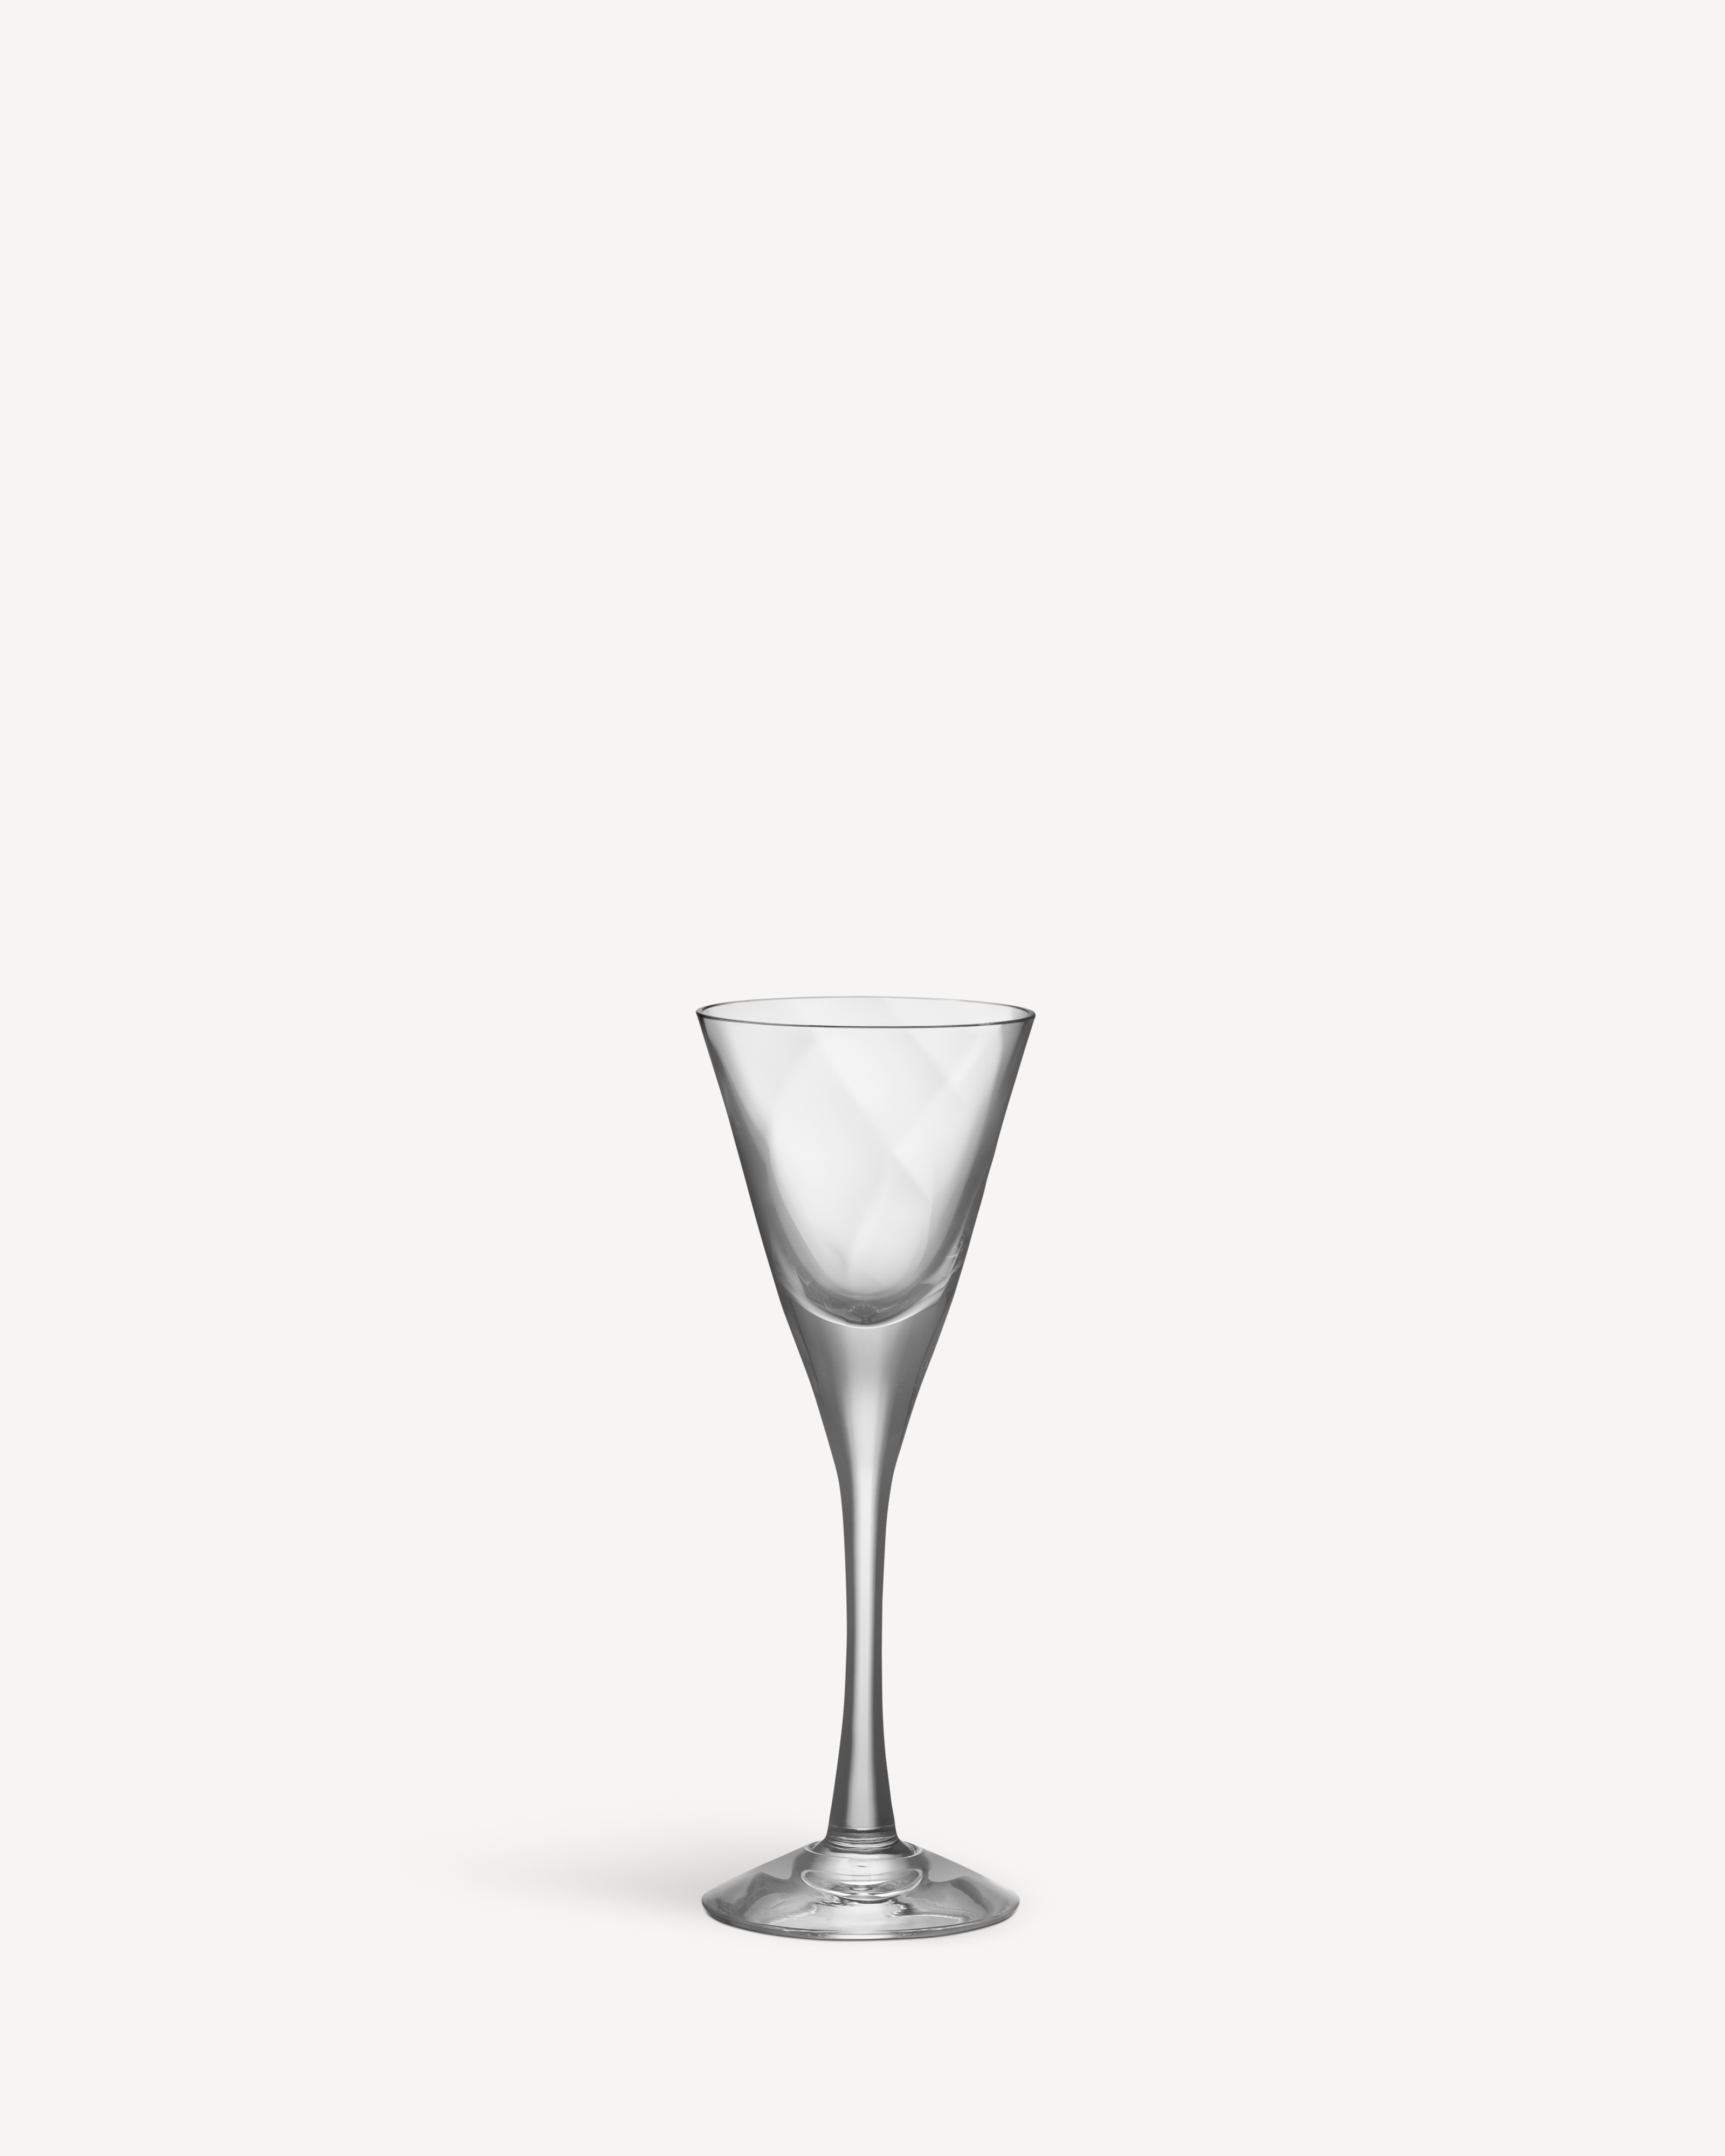 Château coupe champagne glass 35cl | Kosta Boda